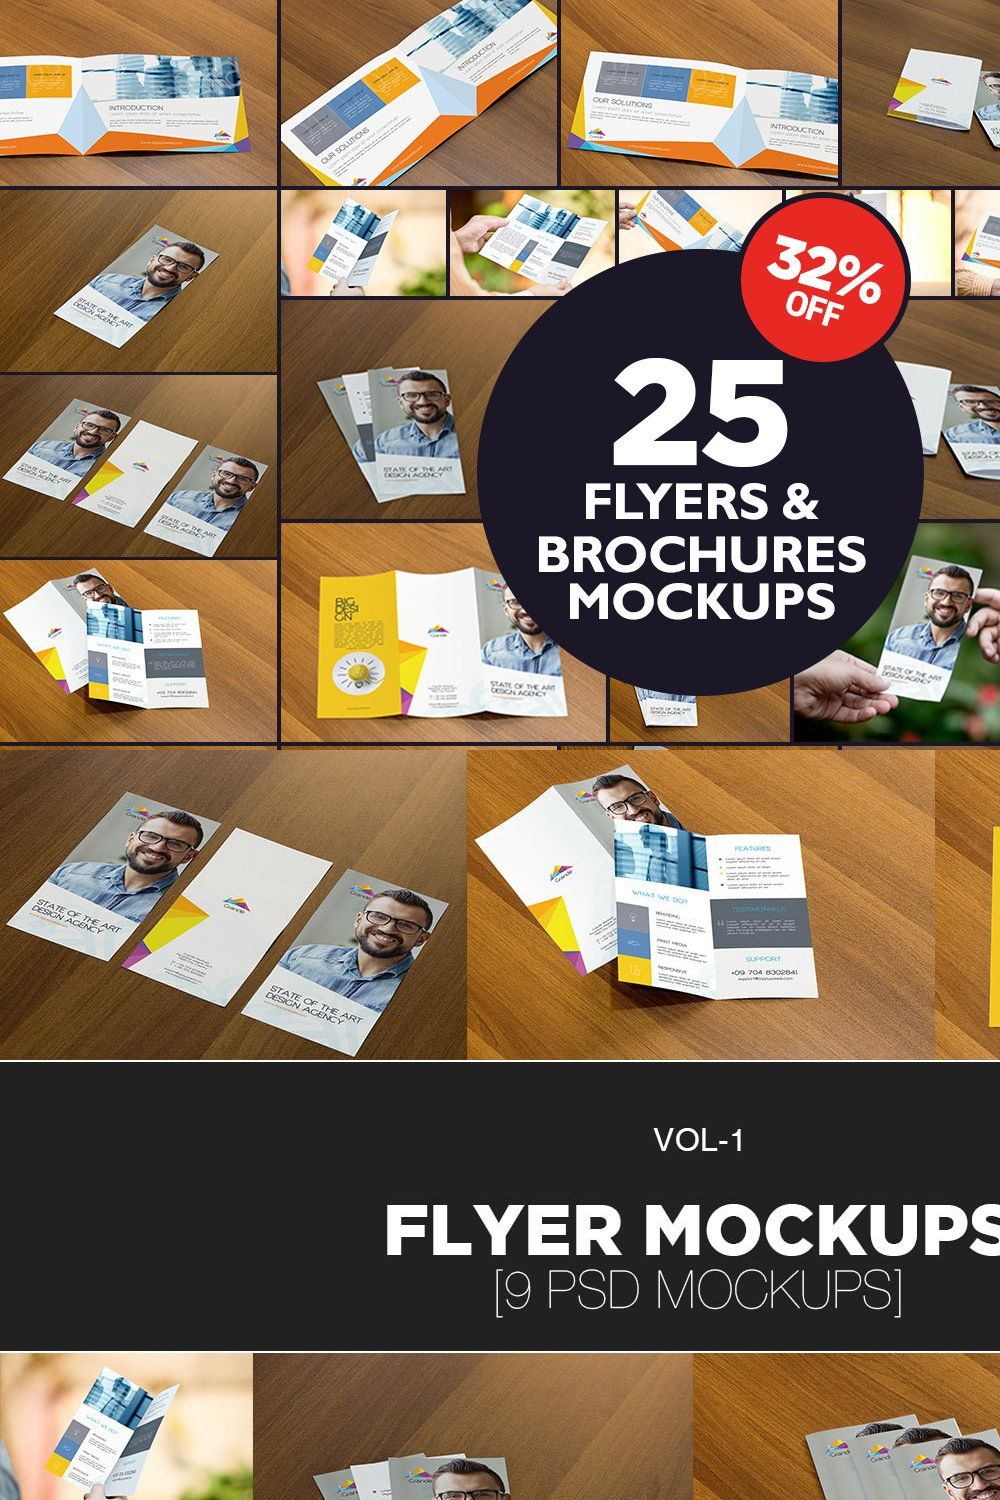 The Flyers & Brochures Mockup Bundle pinterest preview image.